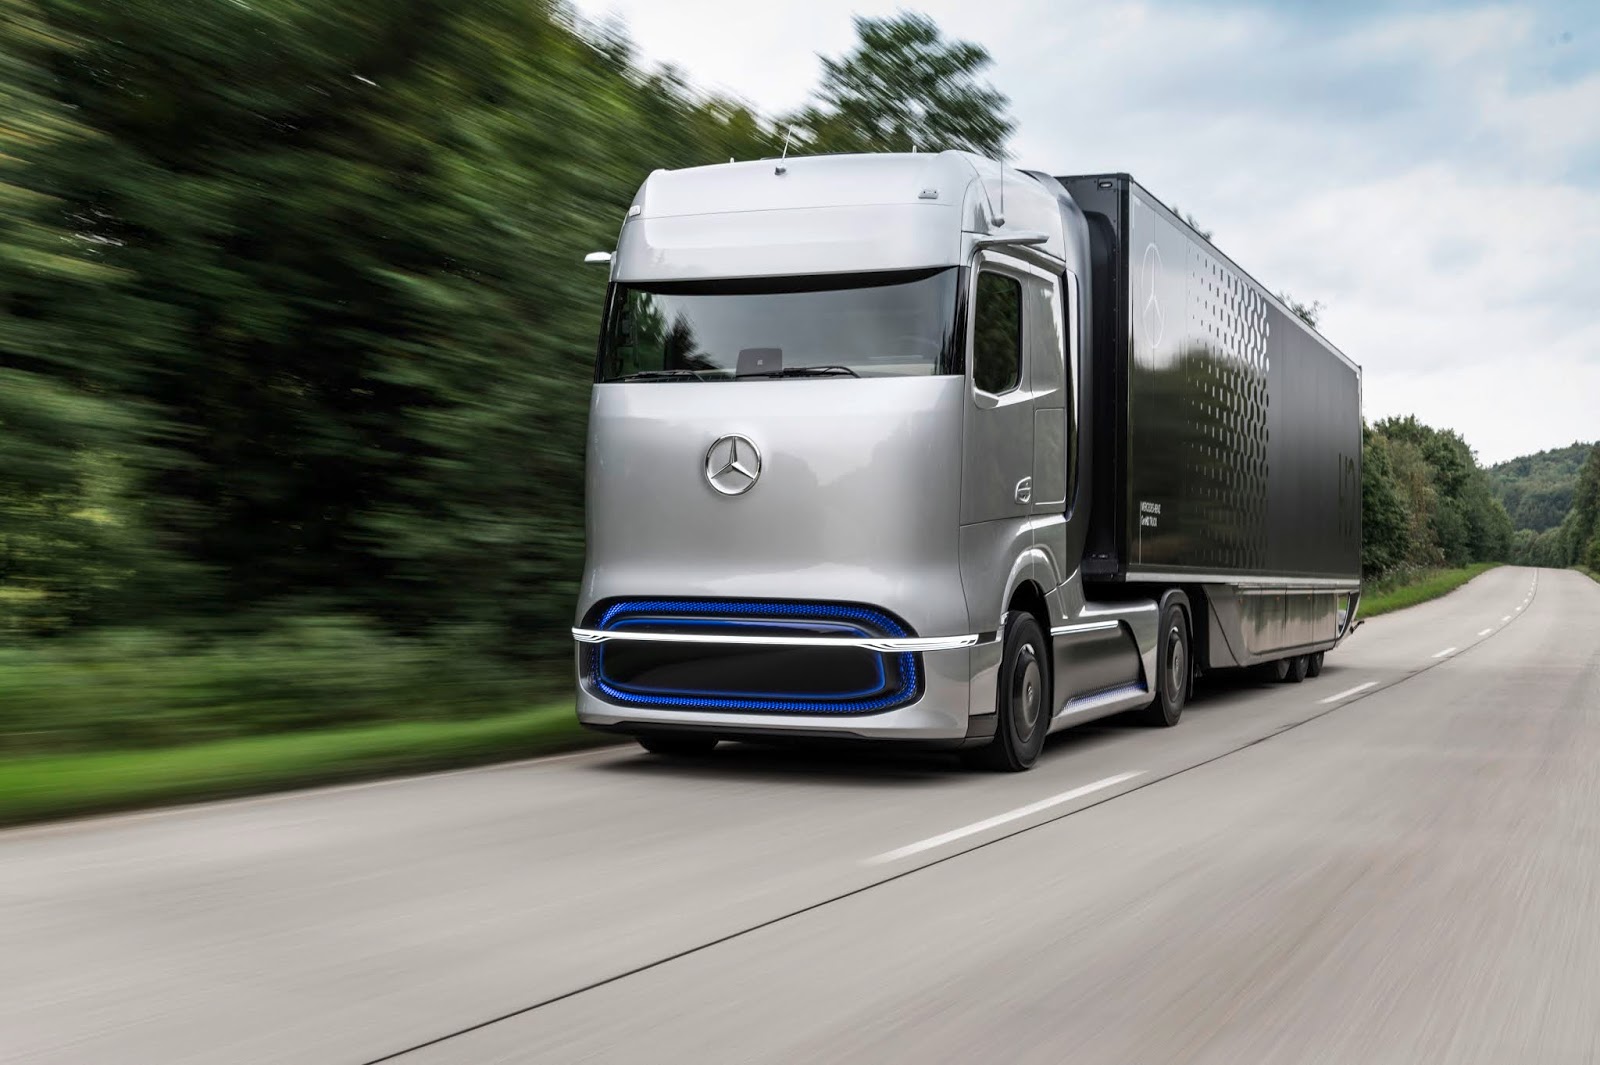 20C0706 07 Οι πρωτοπόροι της ηλεκτροκίνησης: το Mercedes-Benz eActros και το Mercedes-Benz GenH2 Truck κερδίζουν το βραβείο καινοτομίας «Truck Innovation Award 2021»